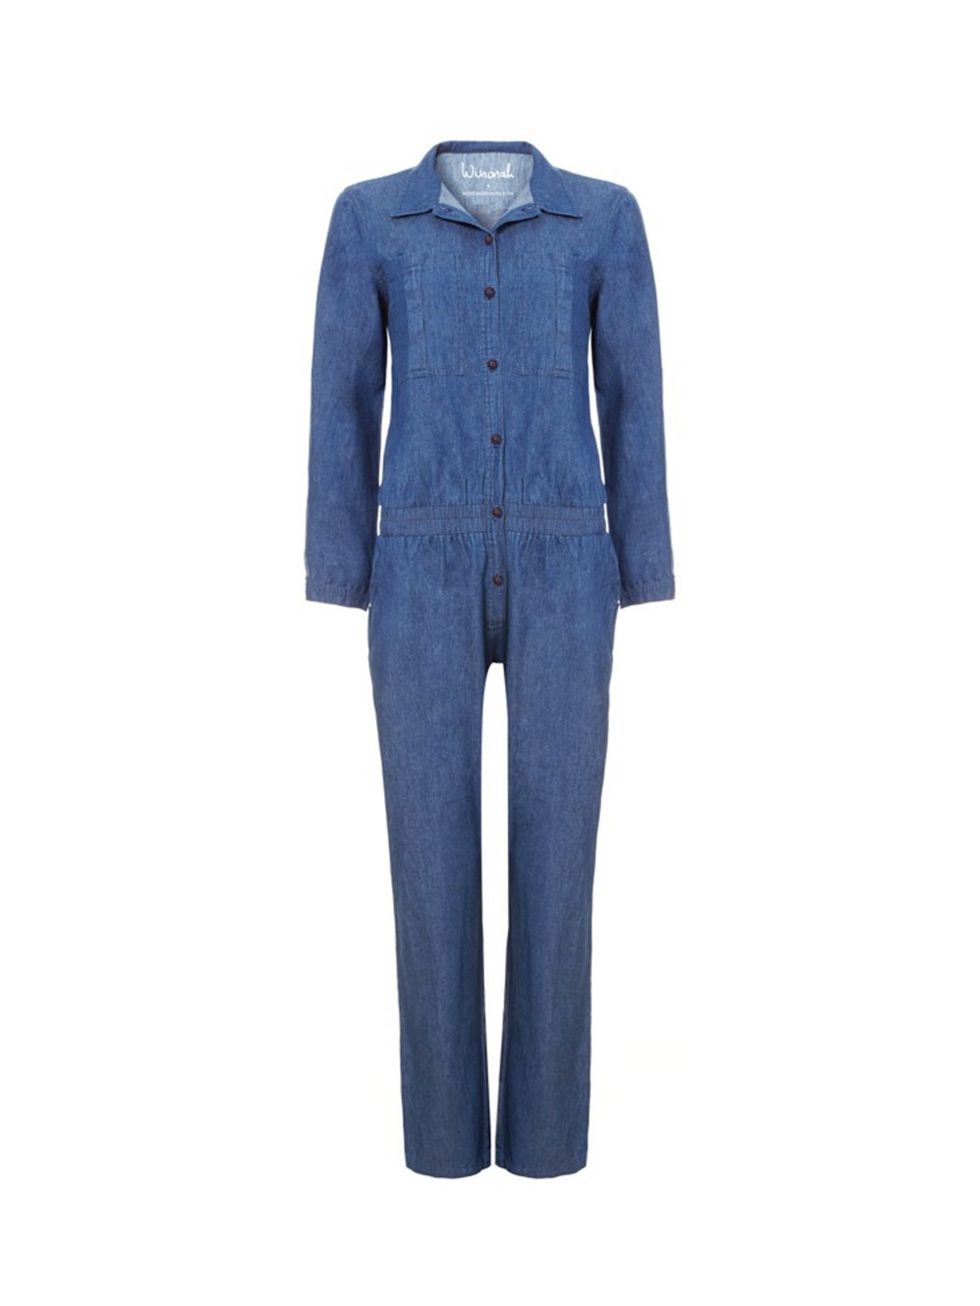 Blue, Collar, Sleeve, Textile, Outerwear, Coat, Blazer, Electric blue, Fashion, Cobalt blue, 